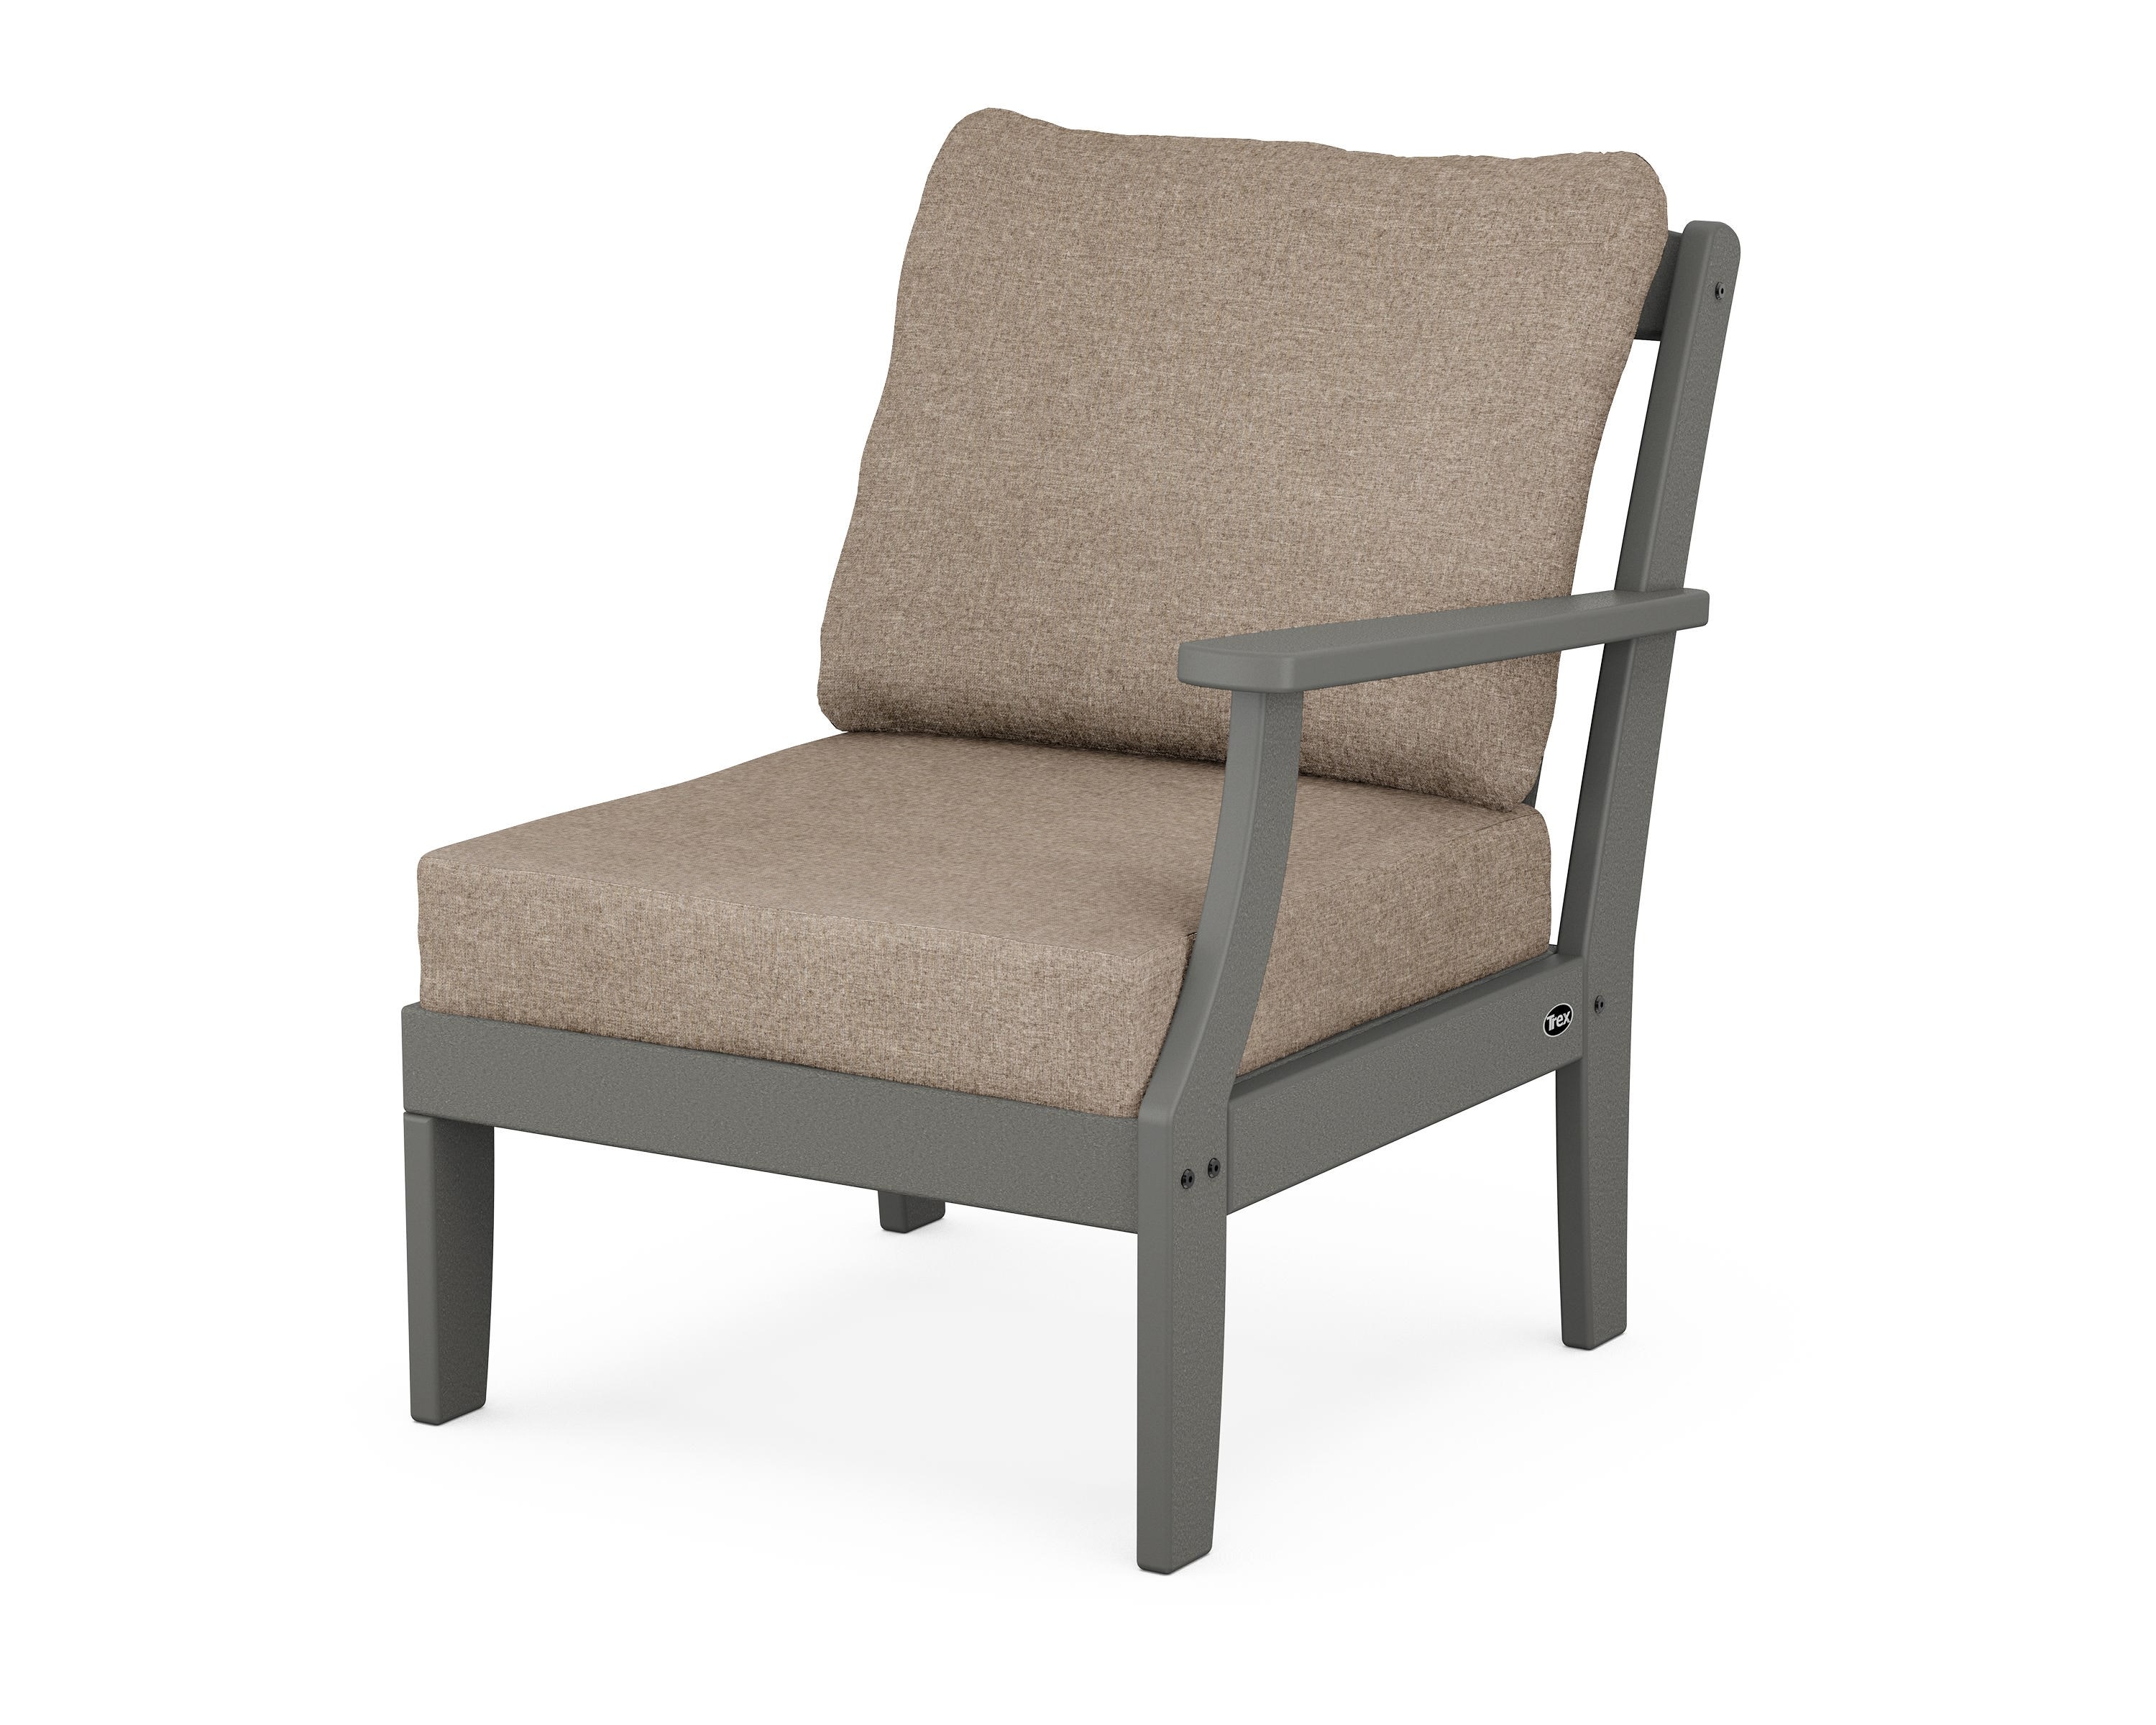 Trex Outdoor Furniture Yacht Club Modular Right Arm Chair